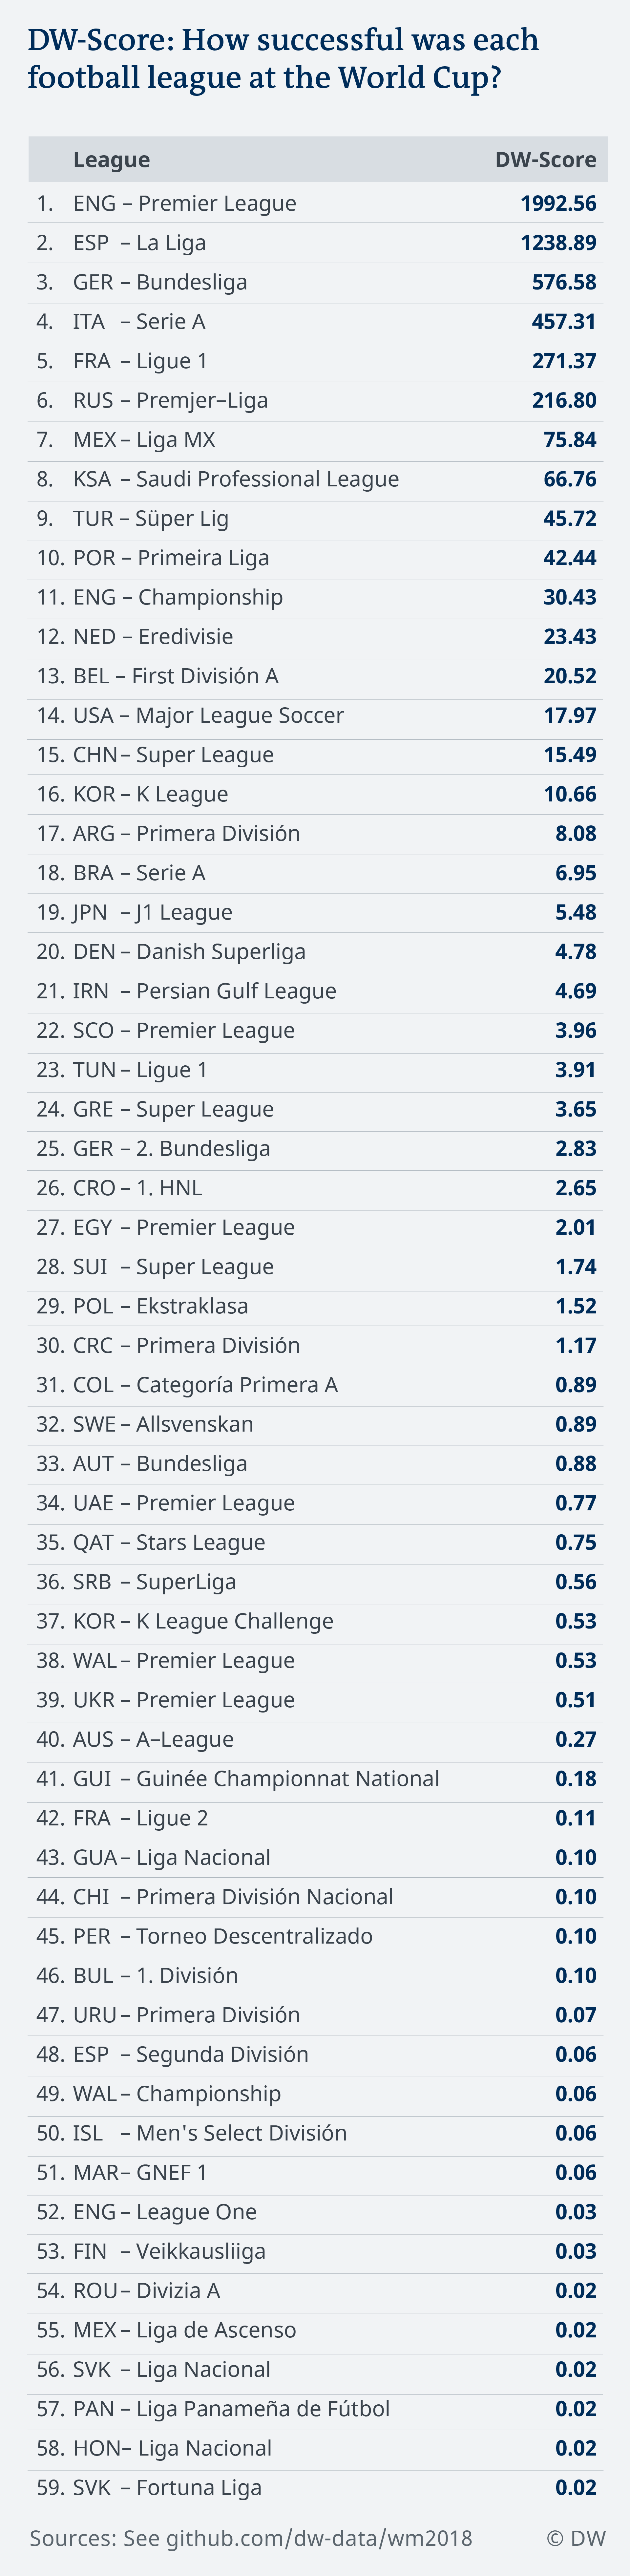 Ranking football leagues DW Score